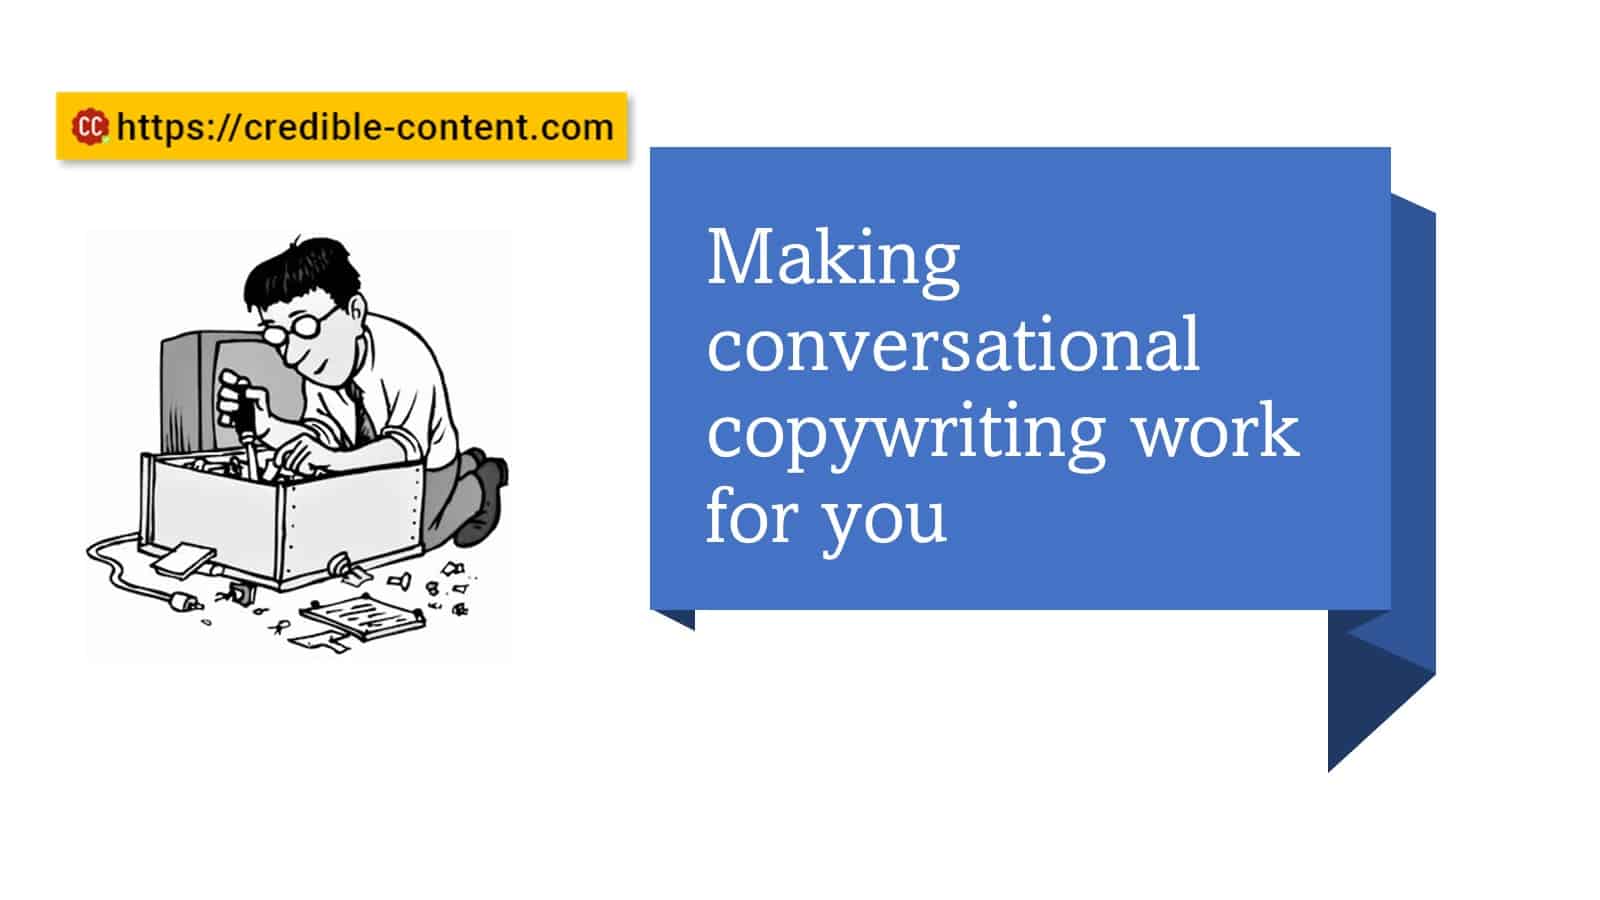 Making conversational copywriting work for you